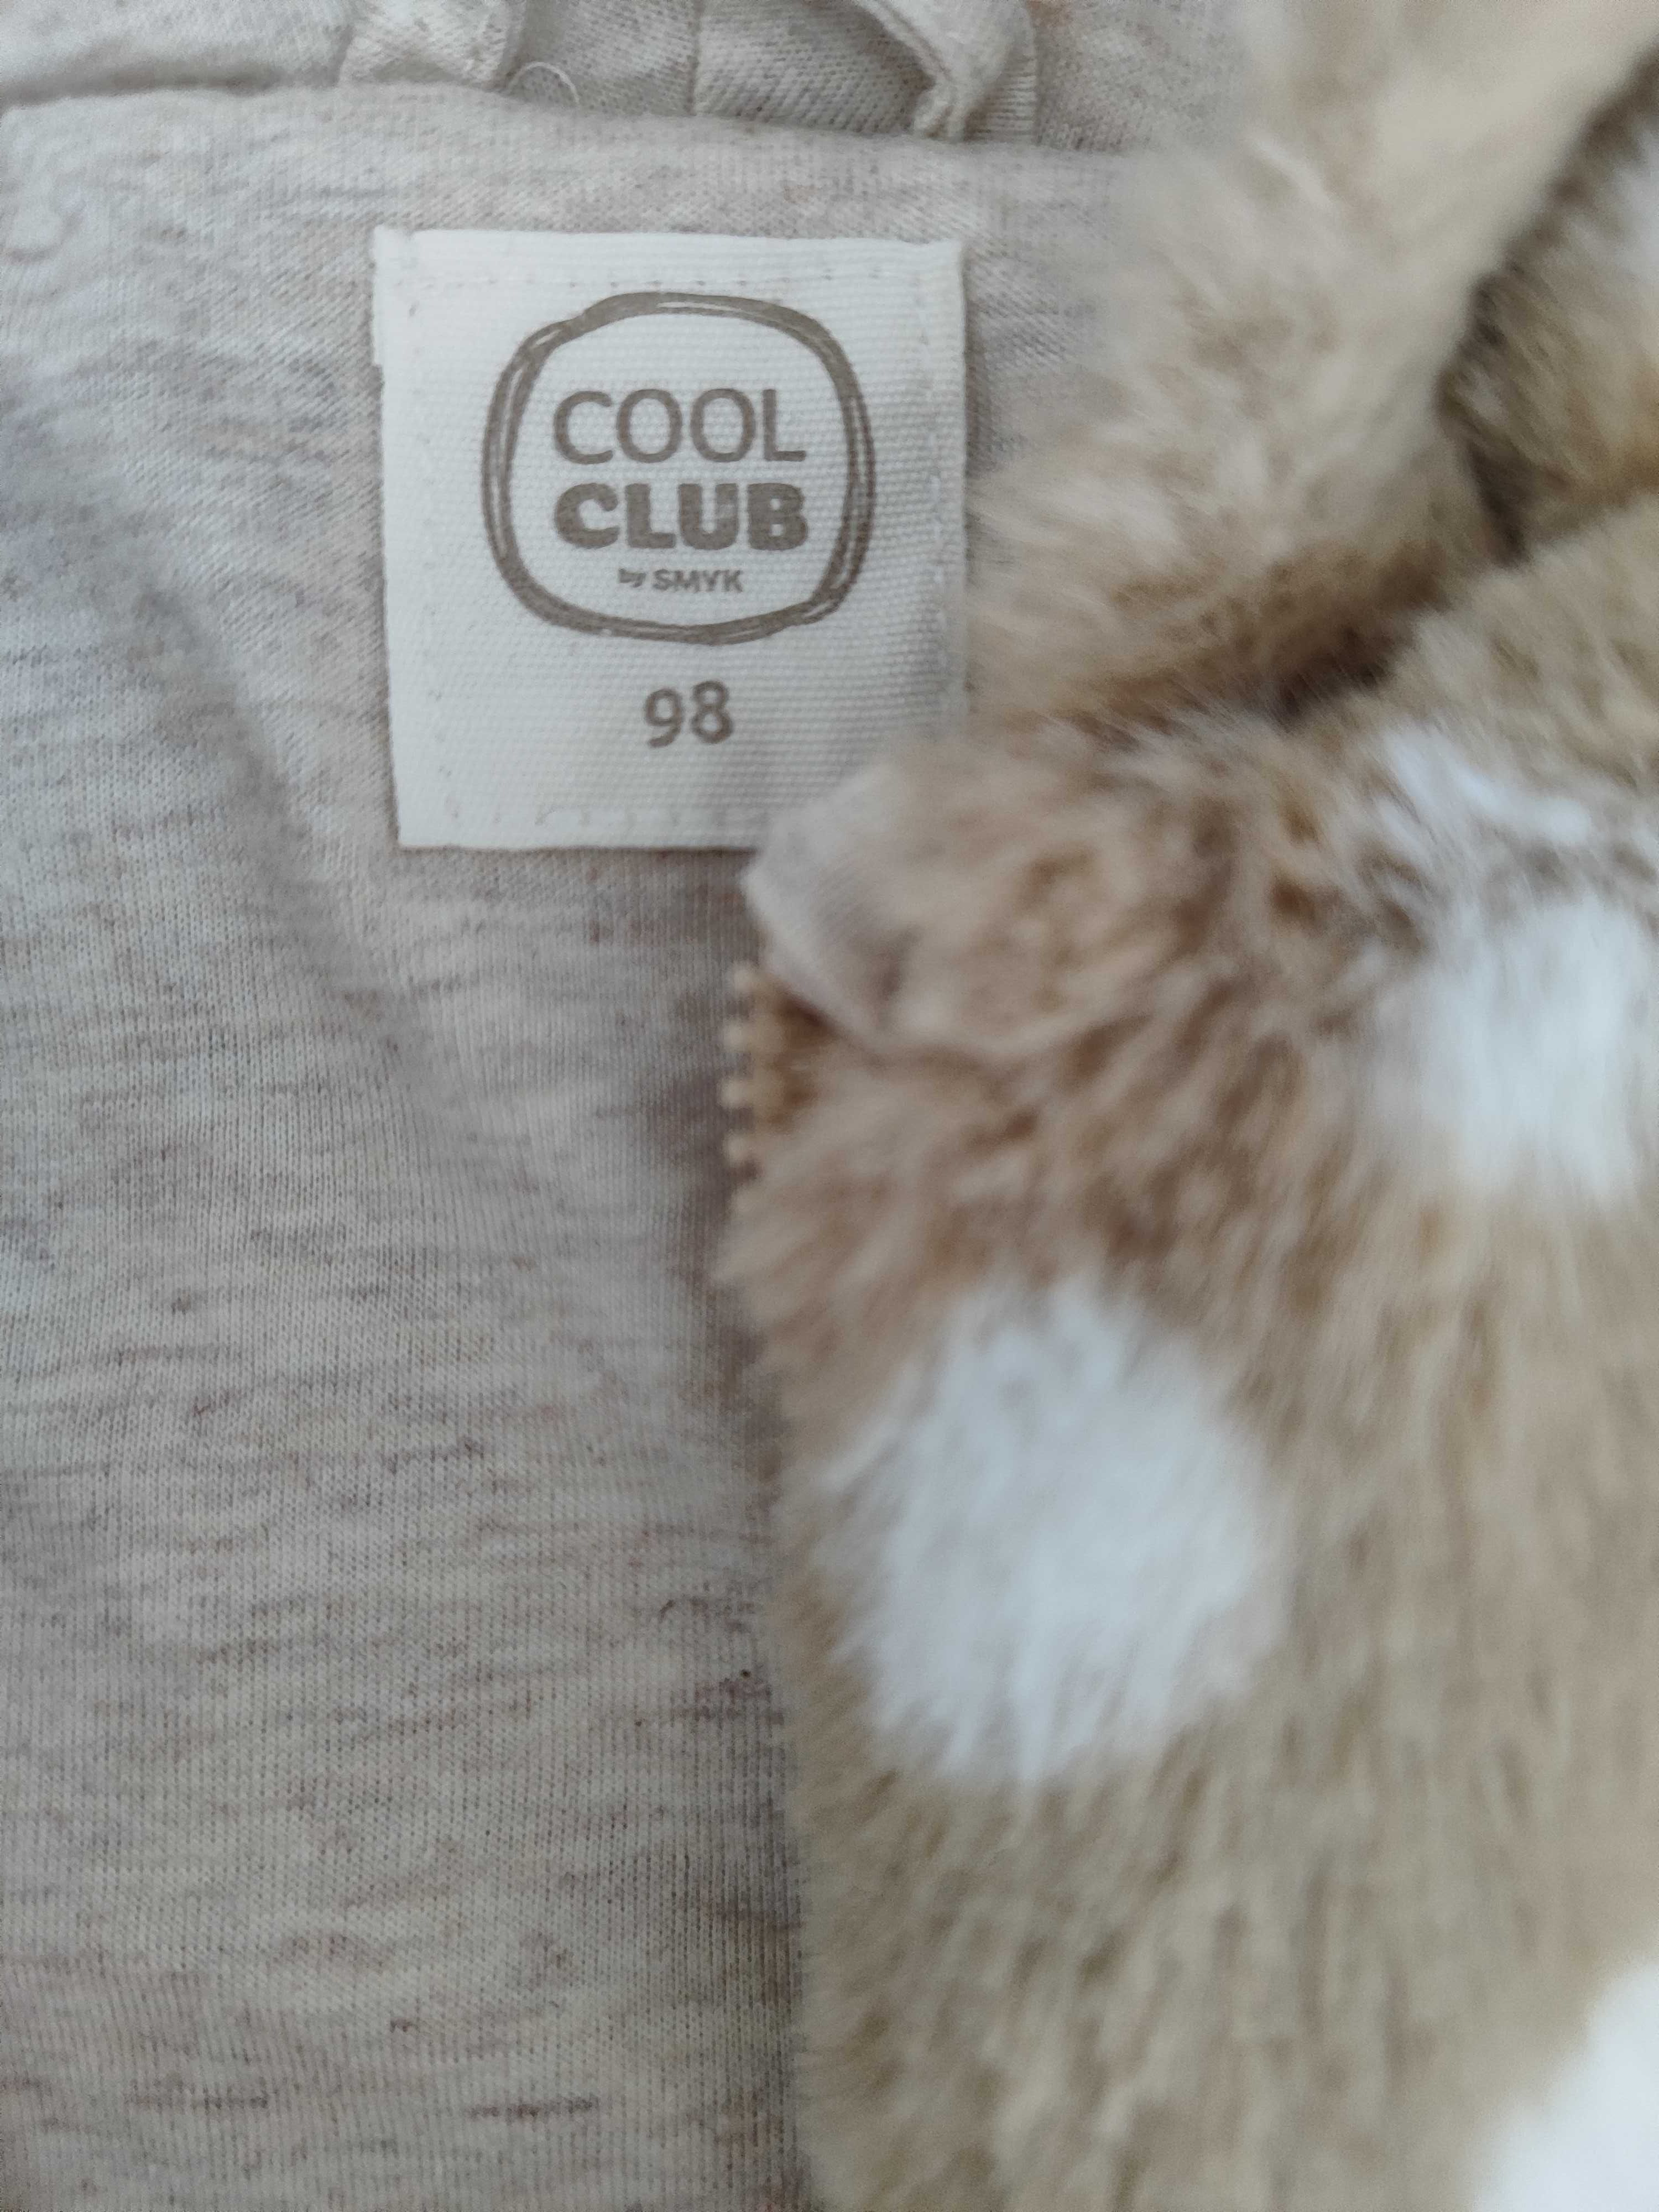 Bluza, kurtka Cool Club,Smyk, r. 98